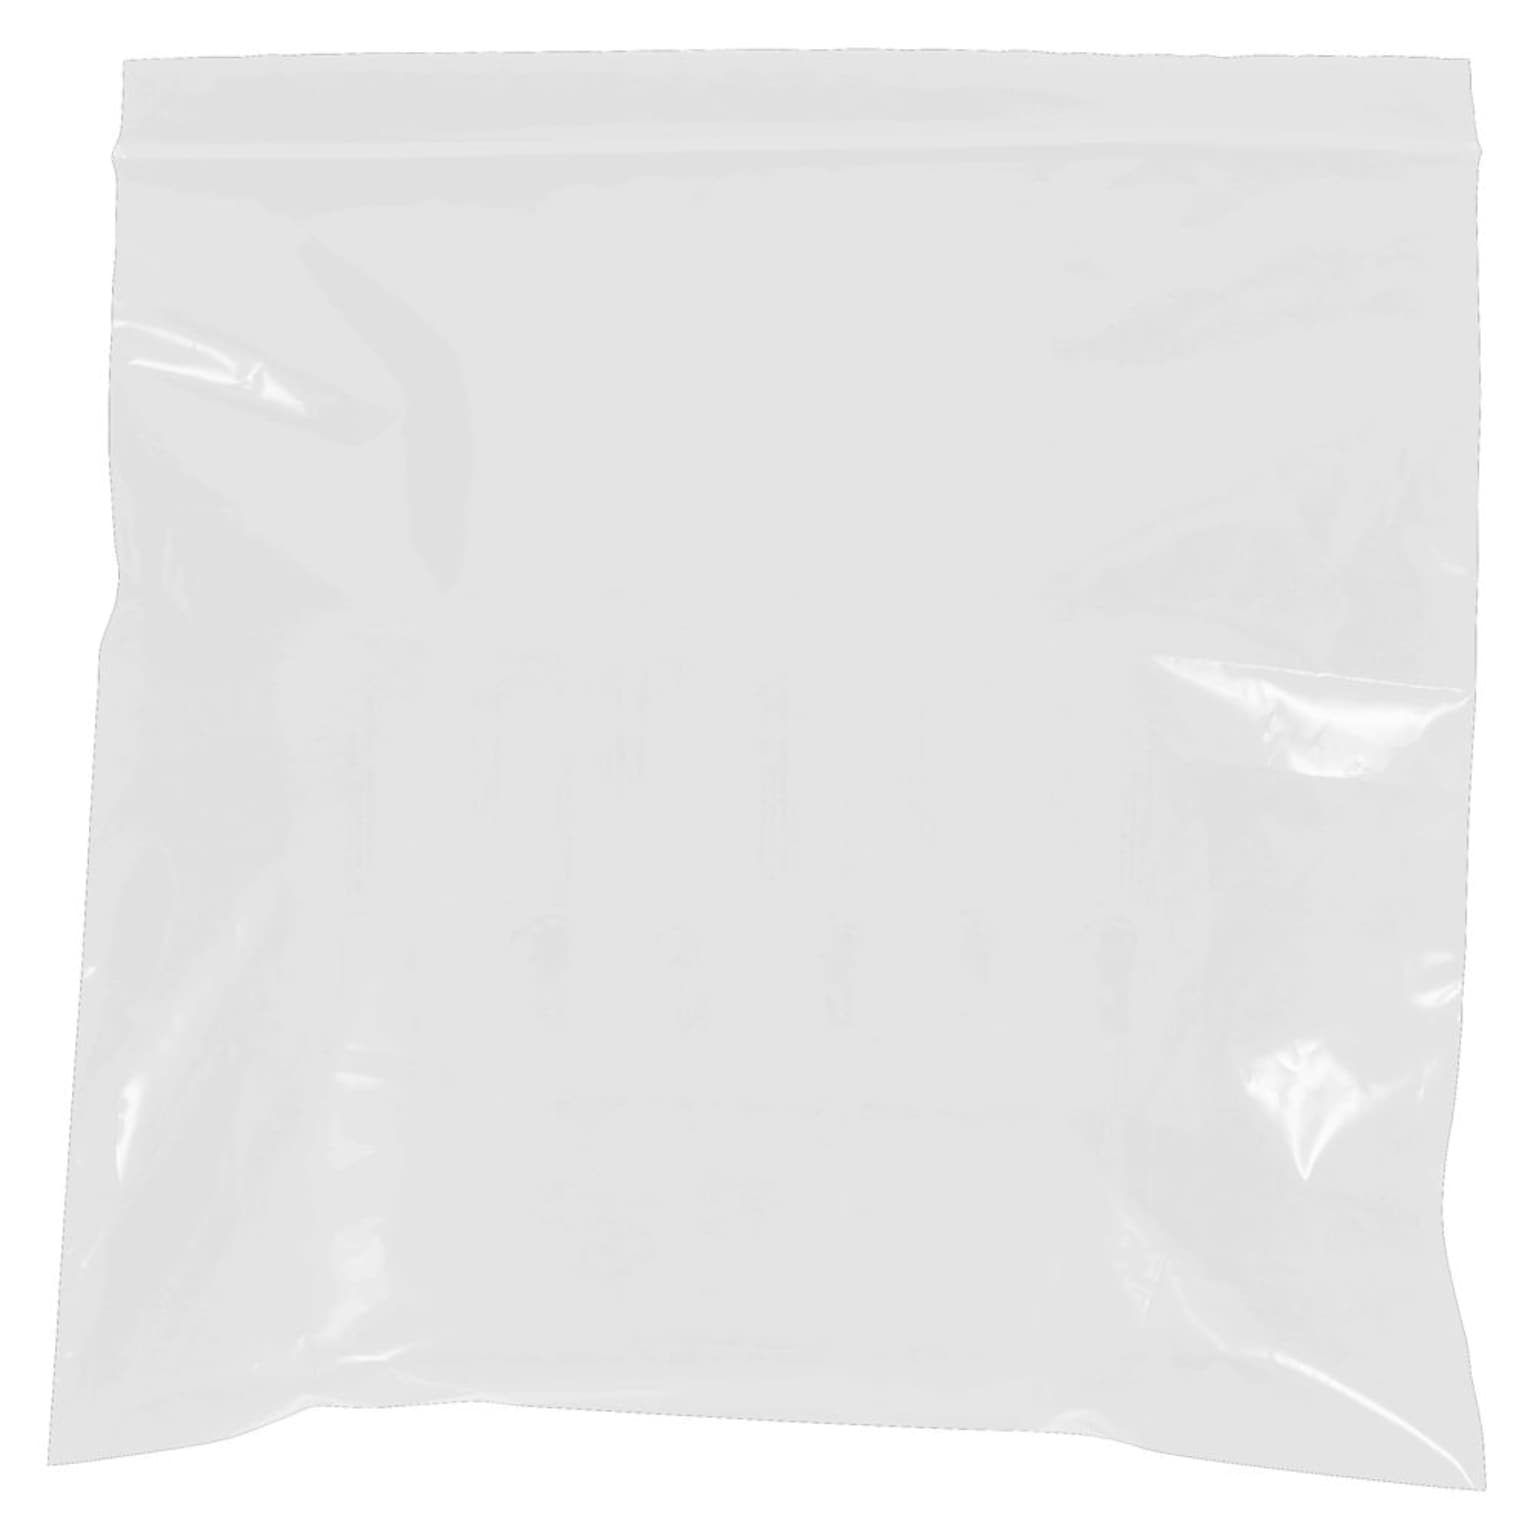 3W x 5L Reclosable Poly Bag, 2.0 Mil, 1000/Carton (PB3550)